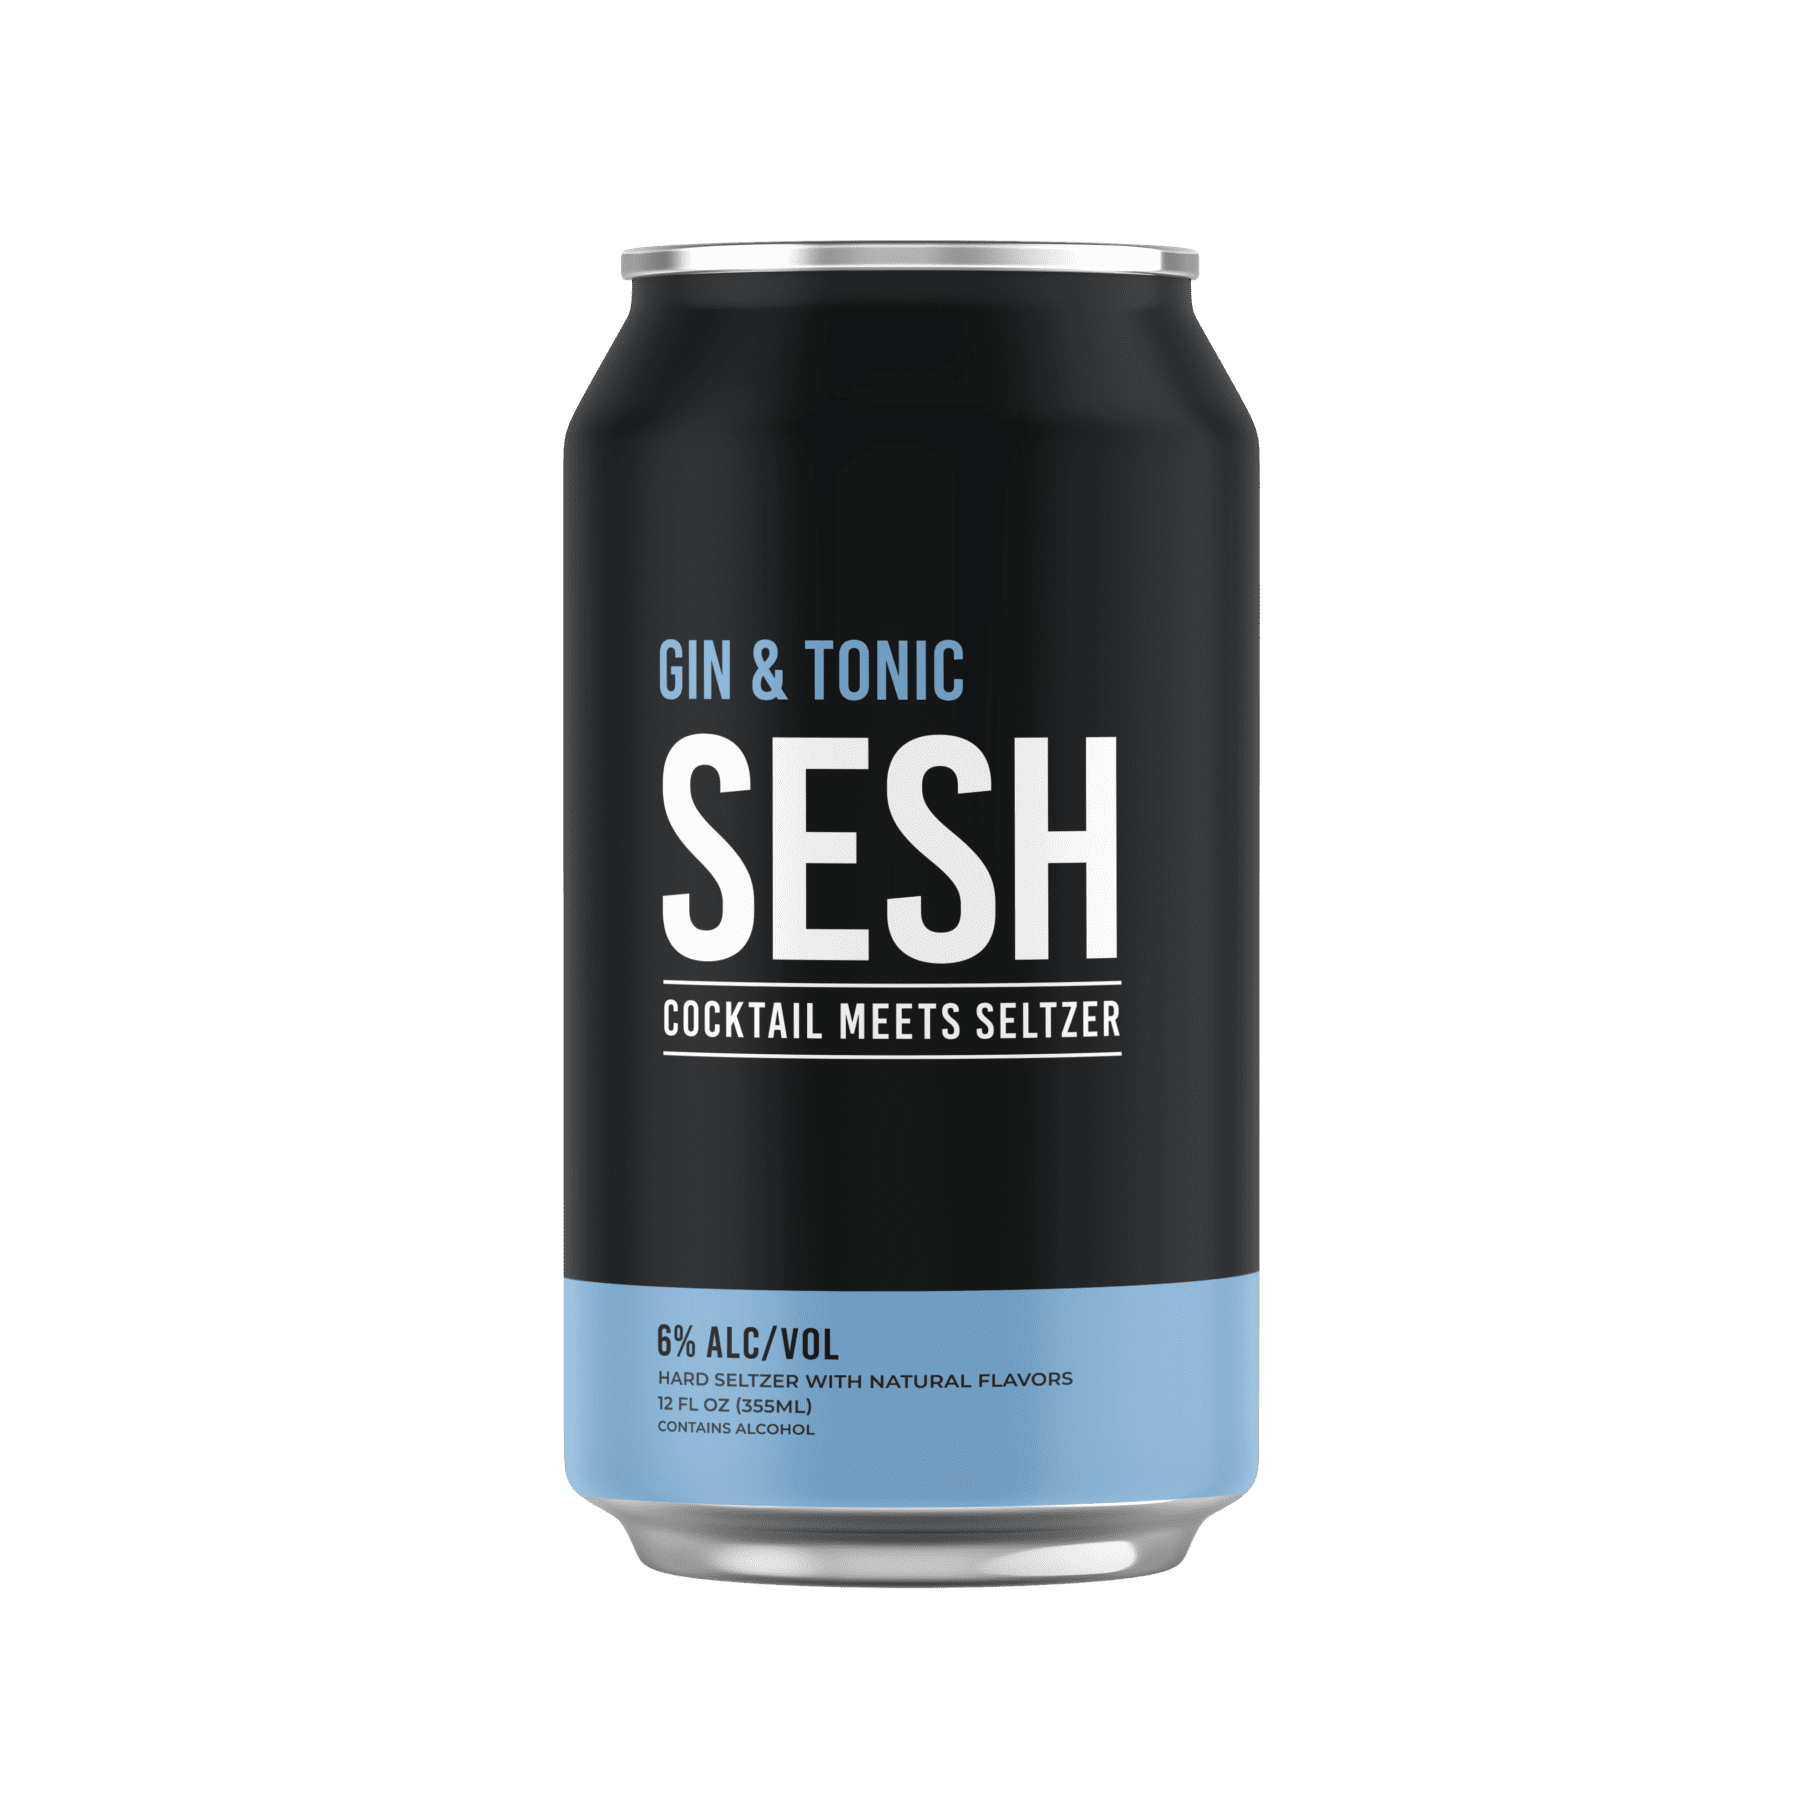 SESH Gin and Tonic